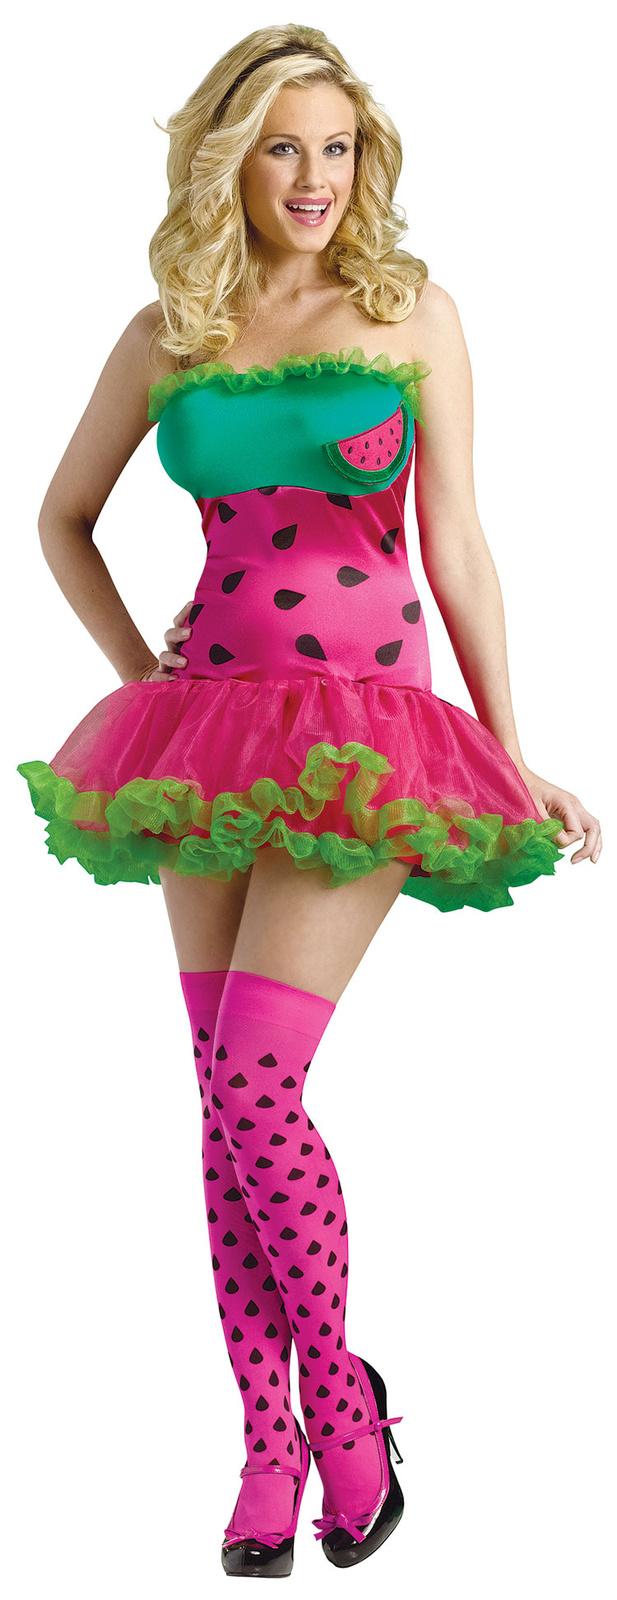 120294-Watermelon-Costume-large